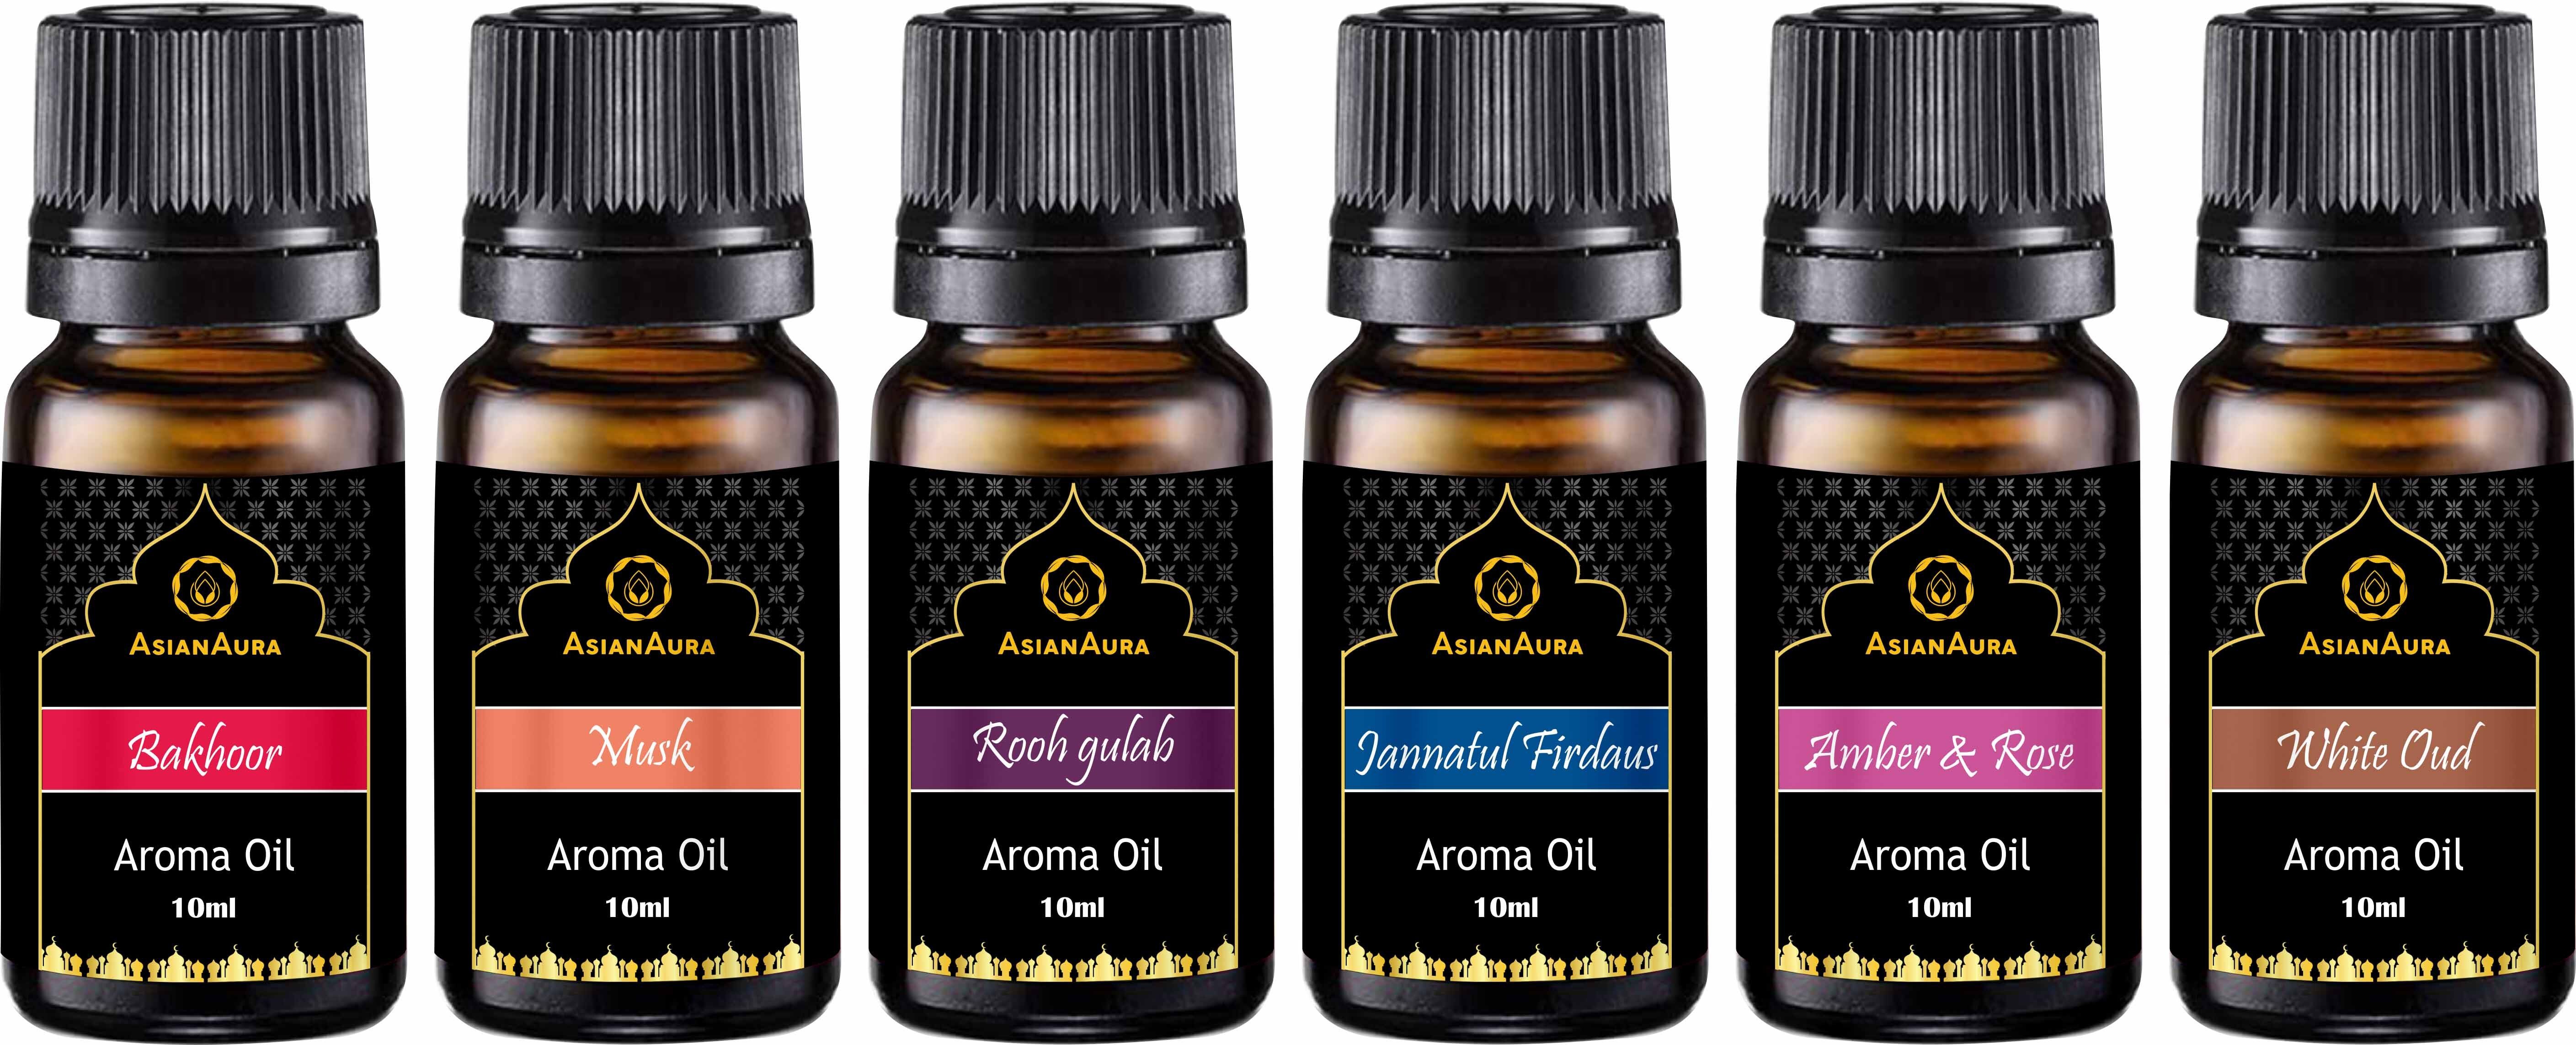 Asian Aura Arabian Nights 10ml Aroma oil Set of 6